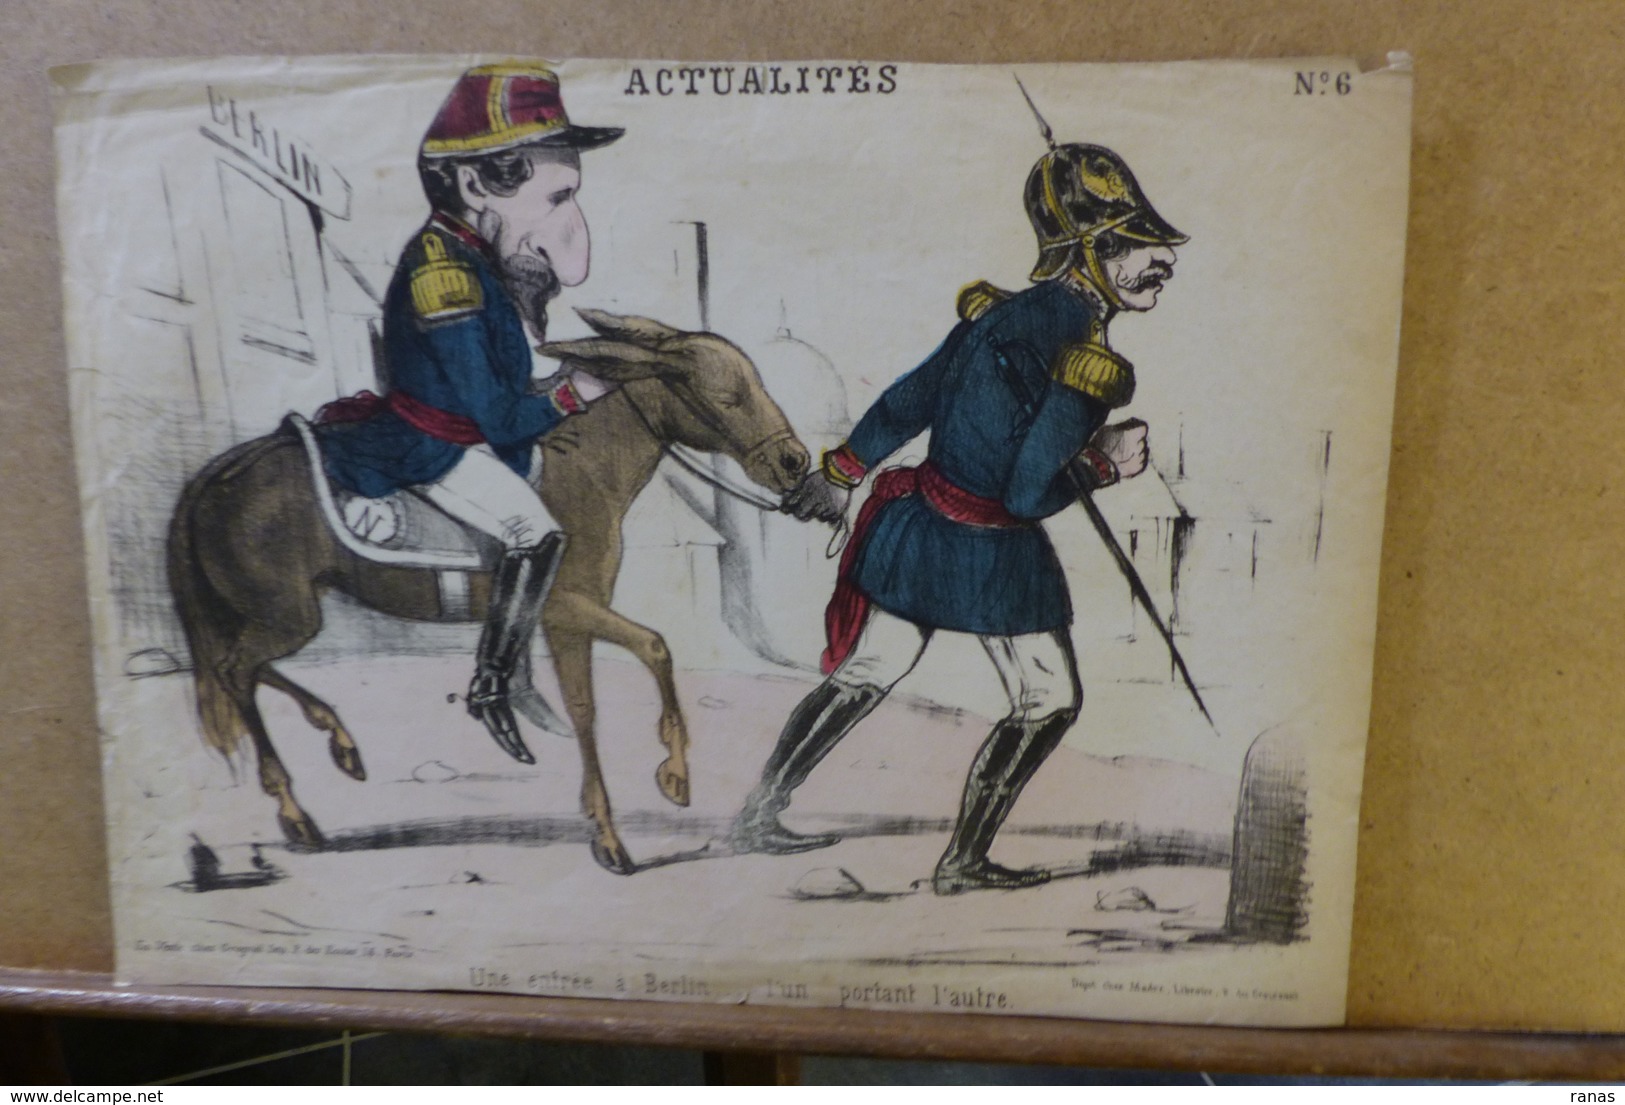 Estampe Gravure Satirique Caricature D'époque 1870 Bismarck Napoléon III 34 X 25 Ane - Estampes & Gravures